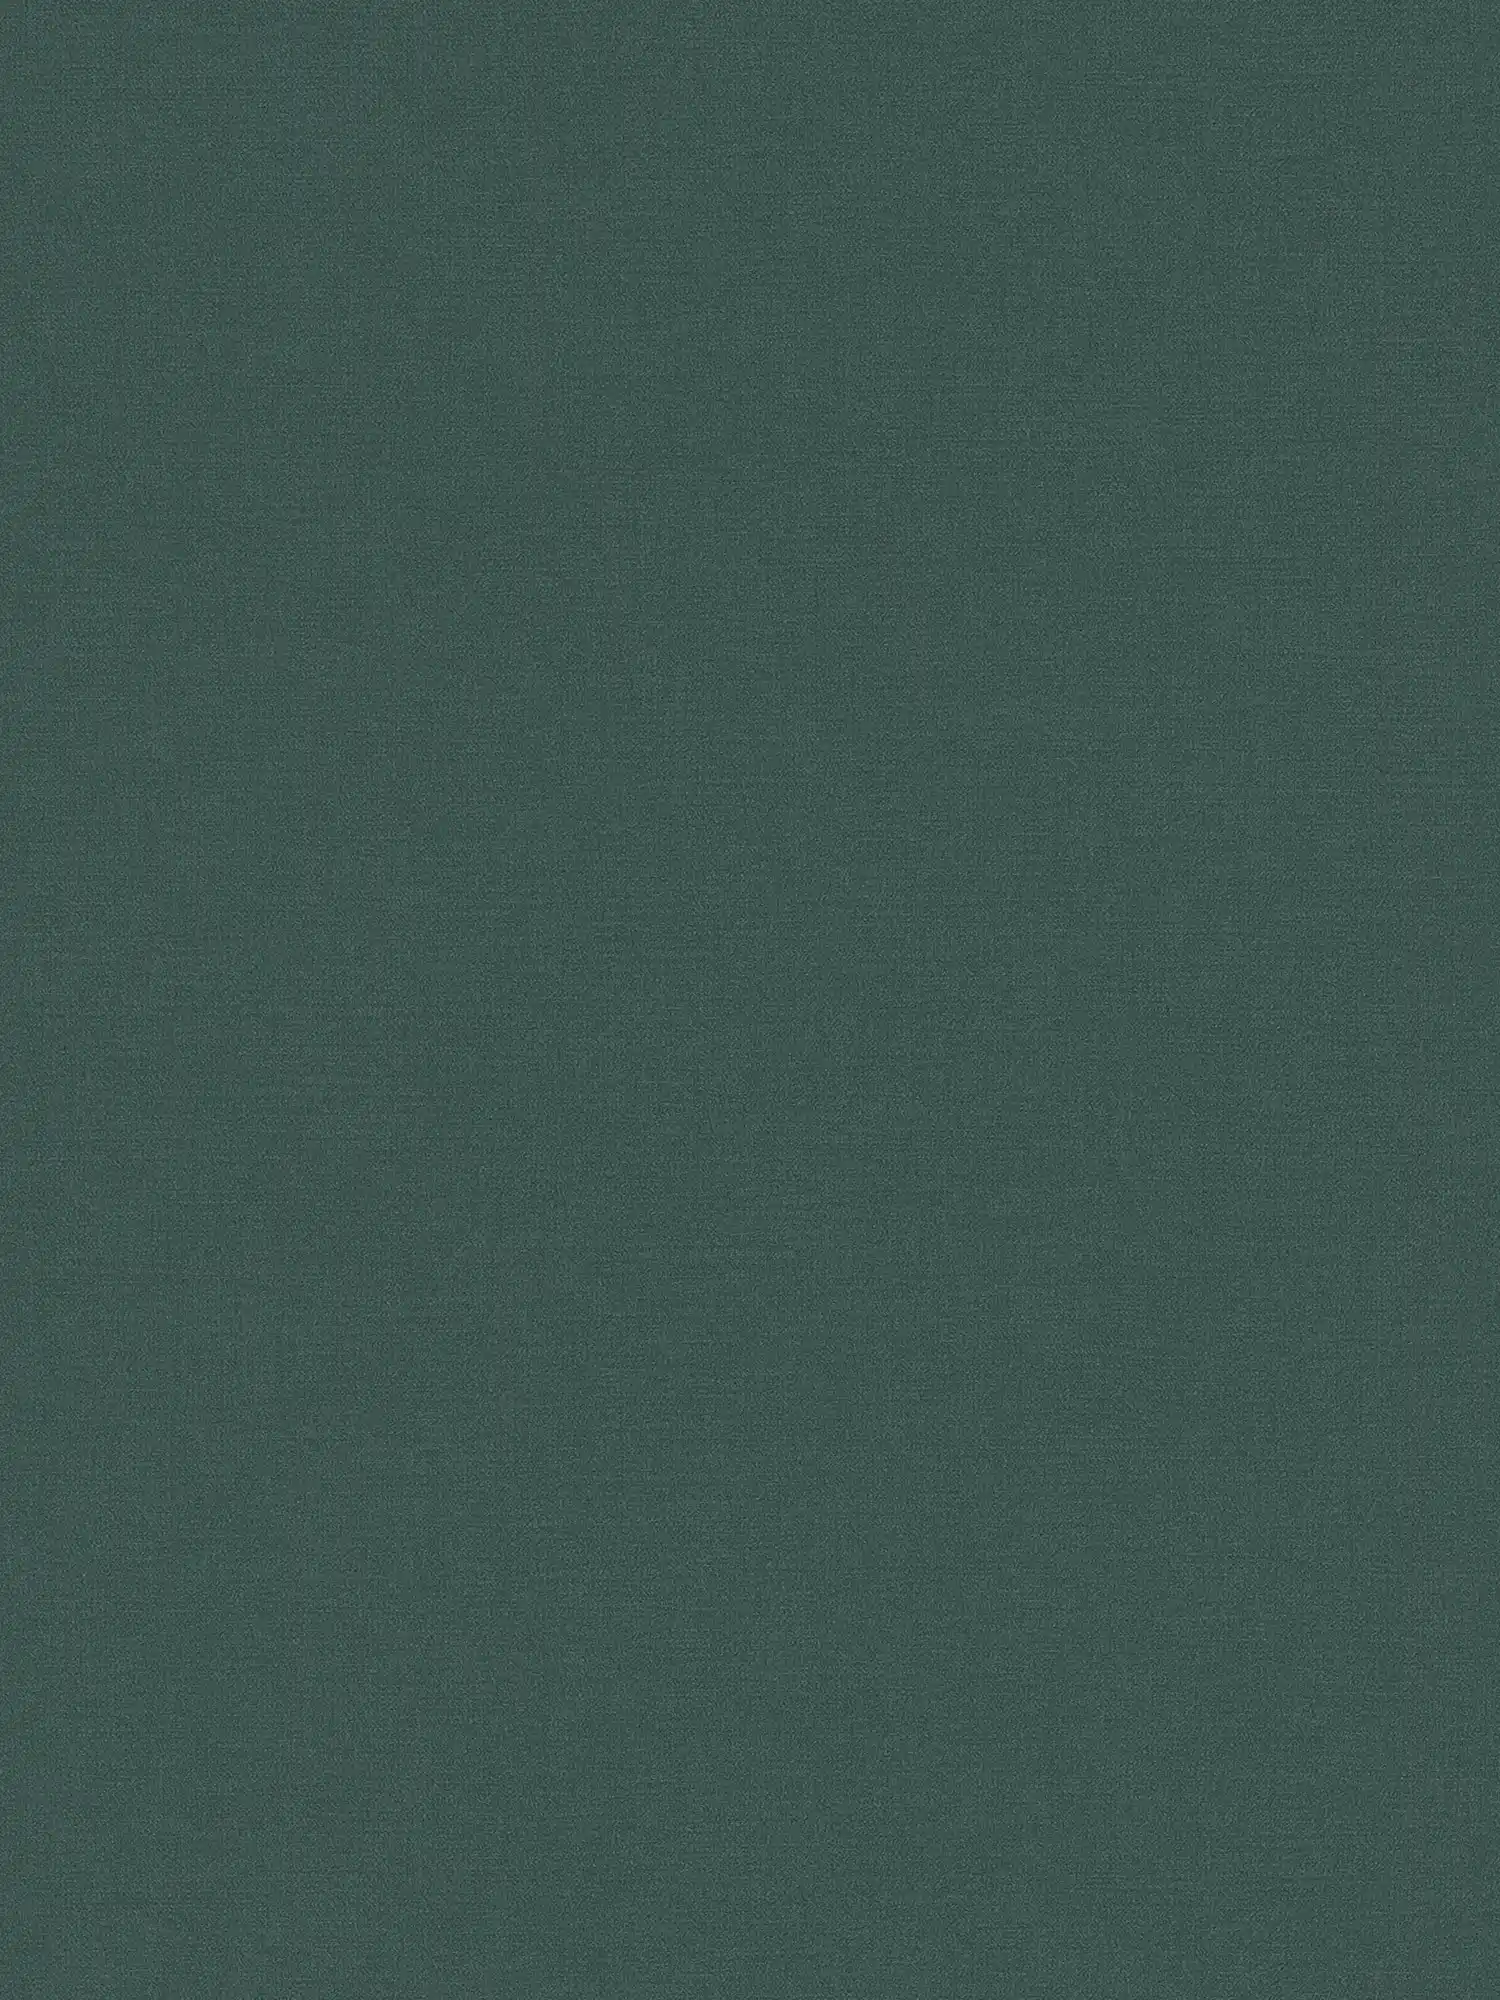 Einfarbige Unitapete in dunkler Farbe – Petrol, Grün
